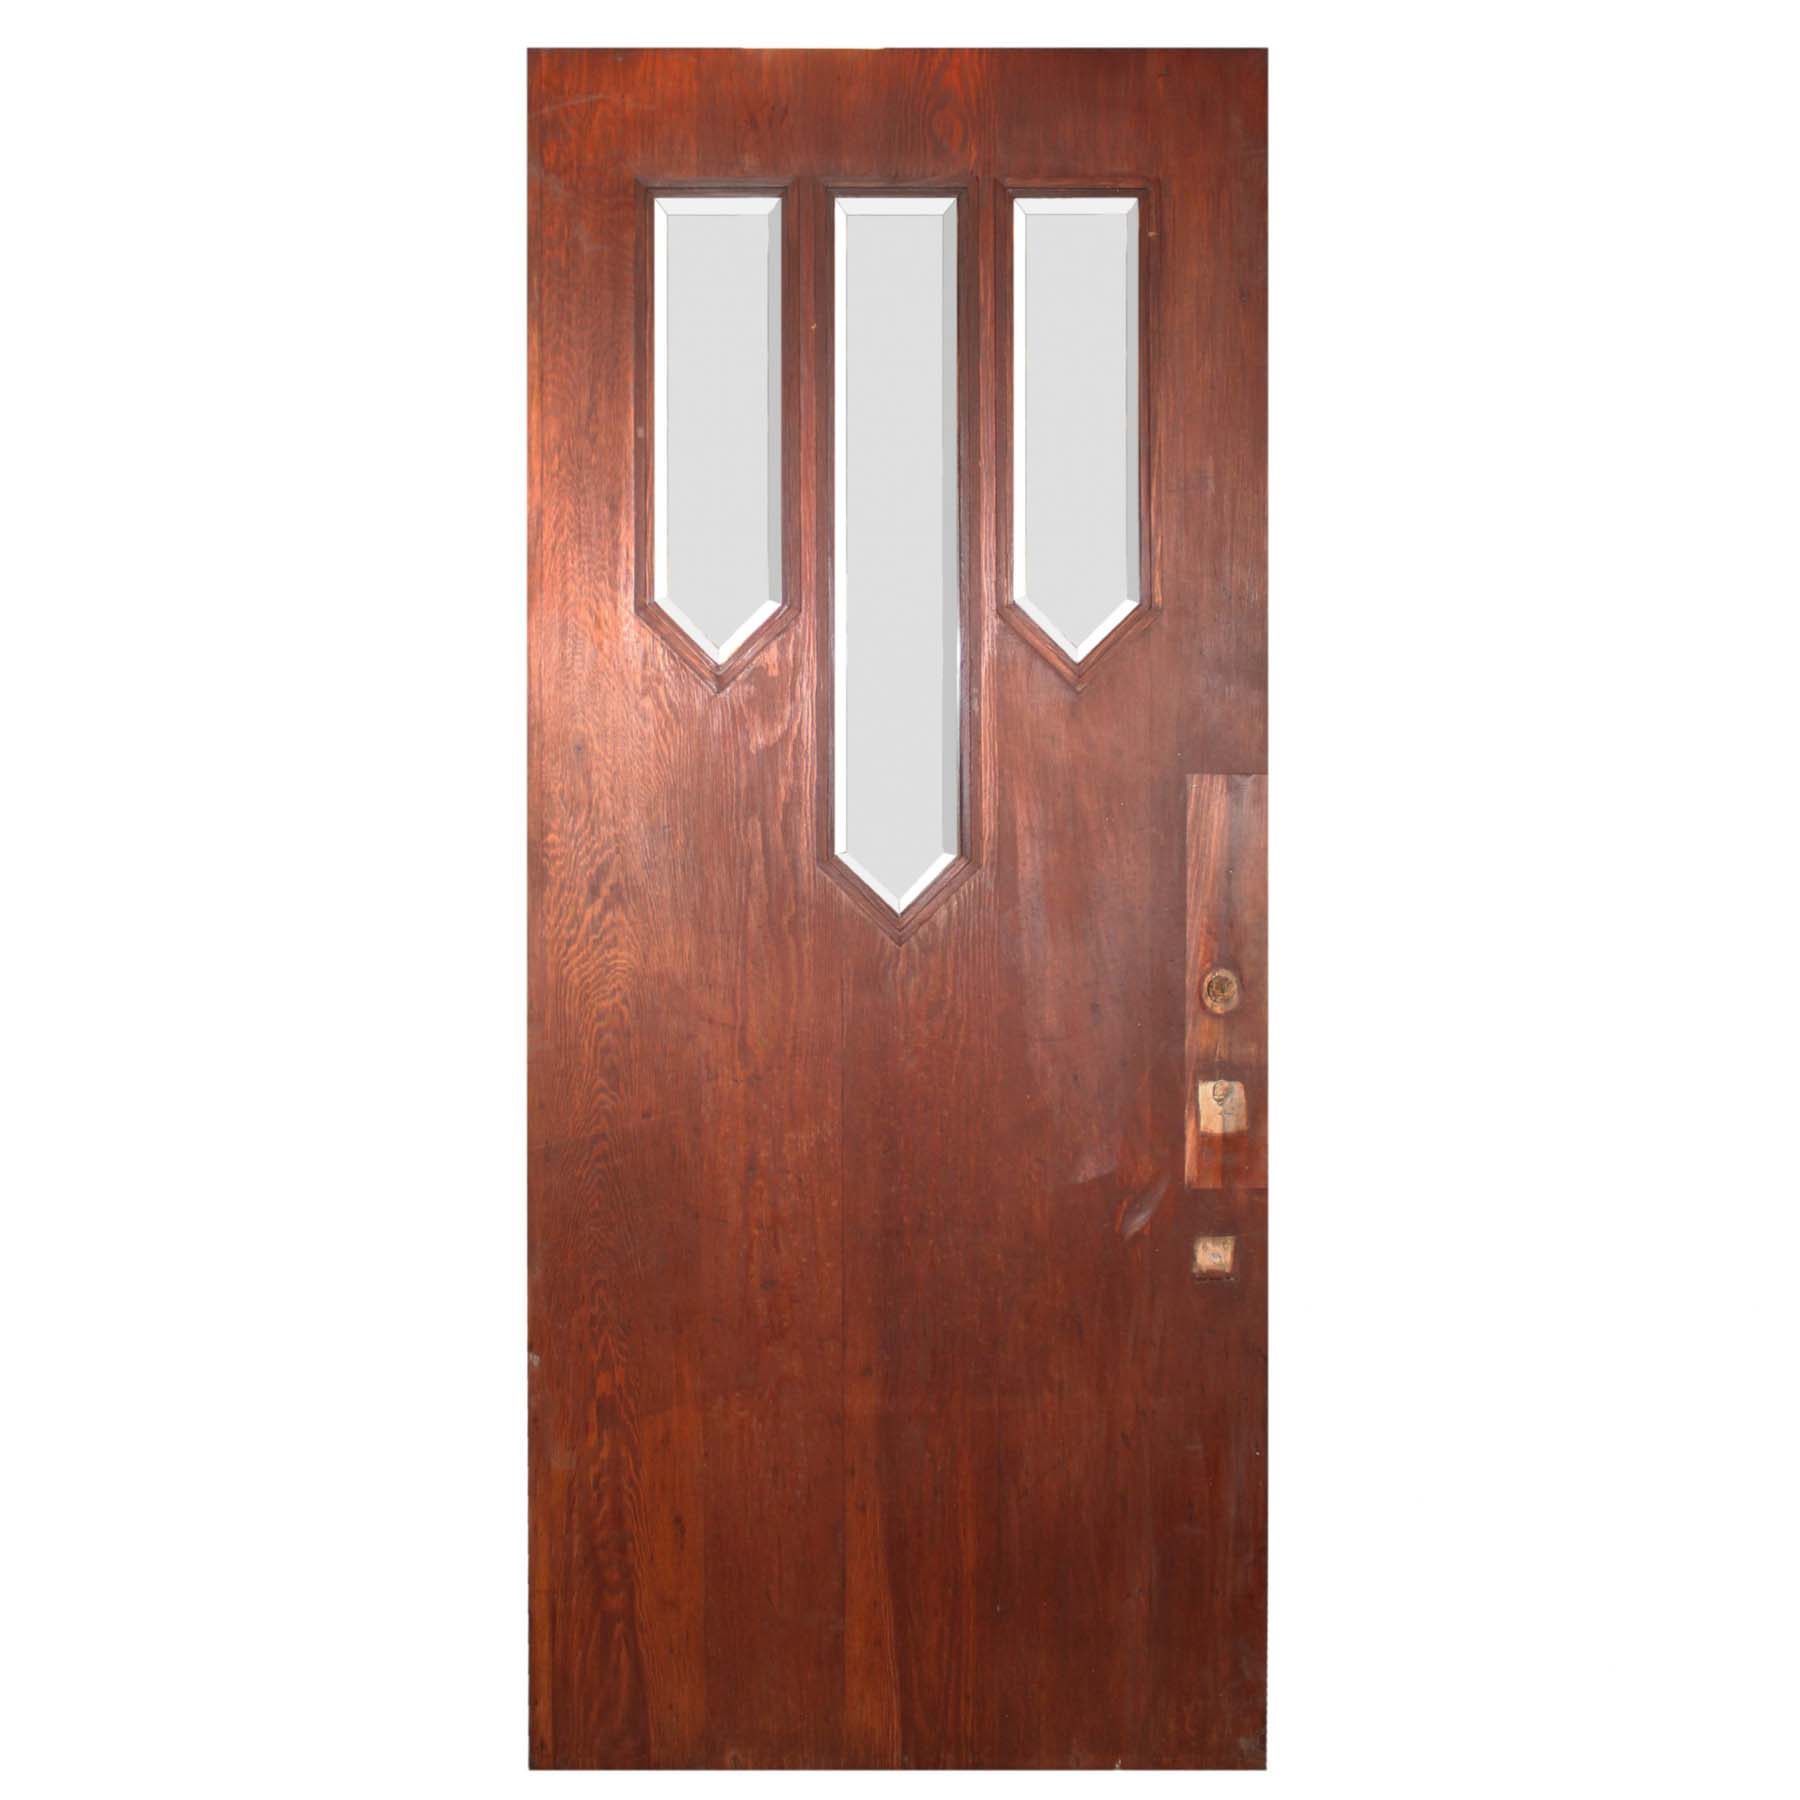 Antique 36” Arts & Crafts Door with Beveled Glass-0